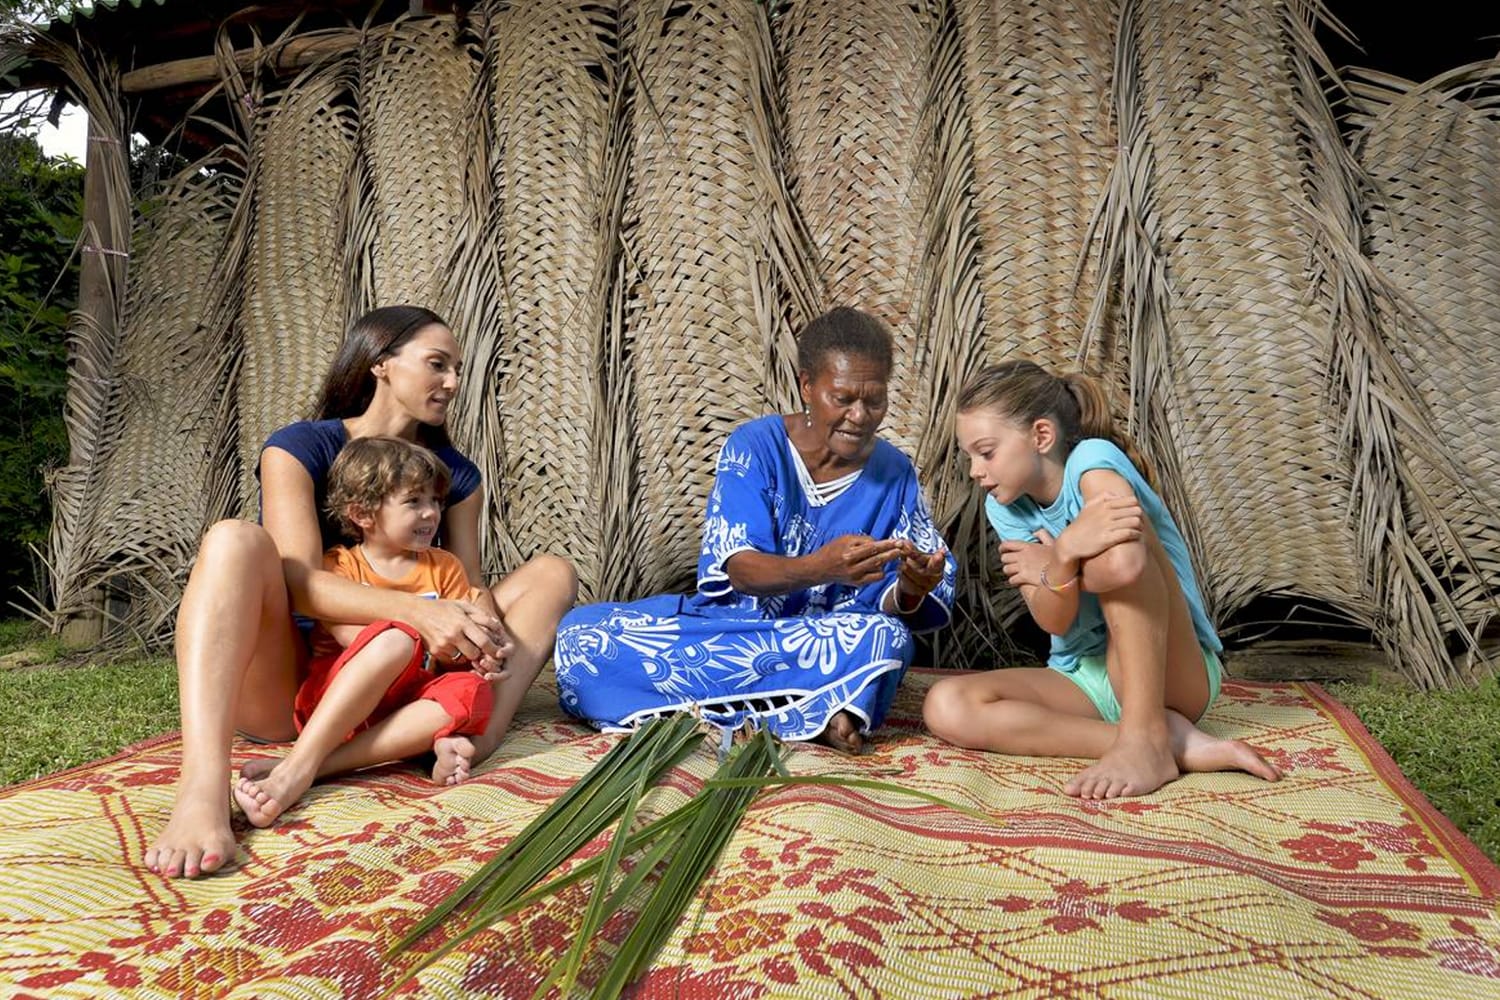 Accueil en Tribu in New Caledonia